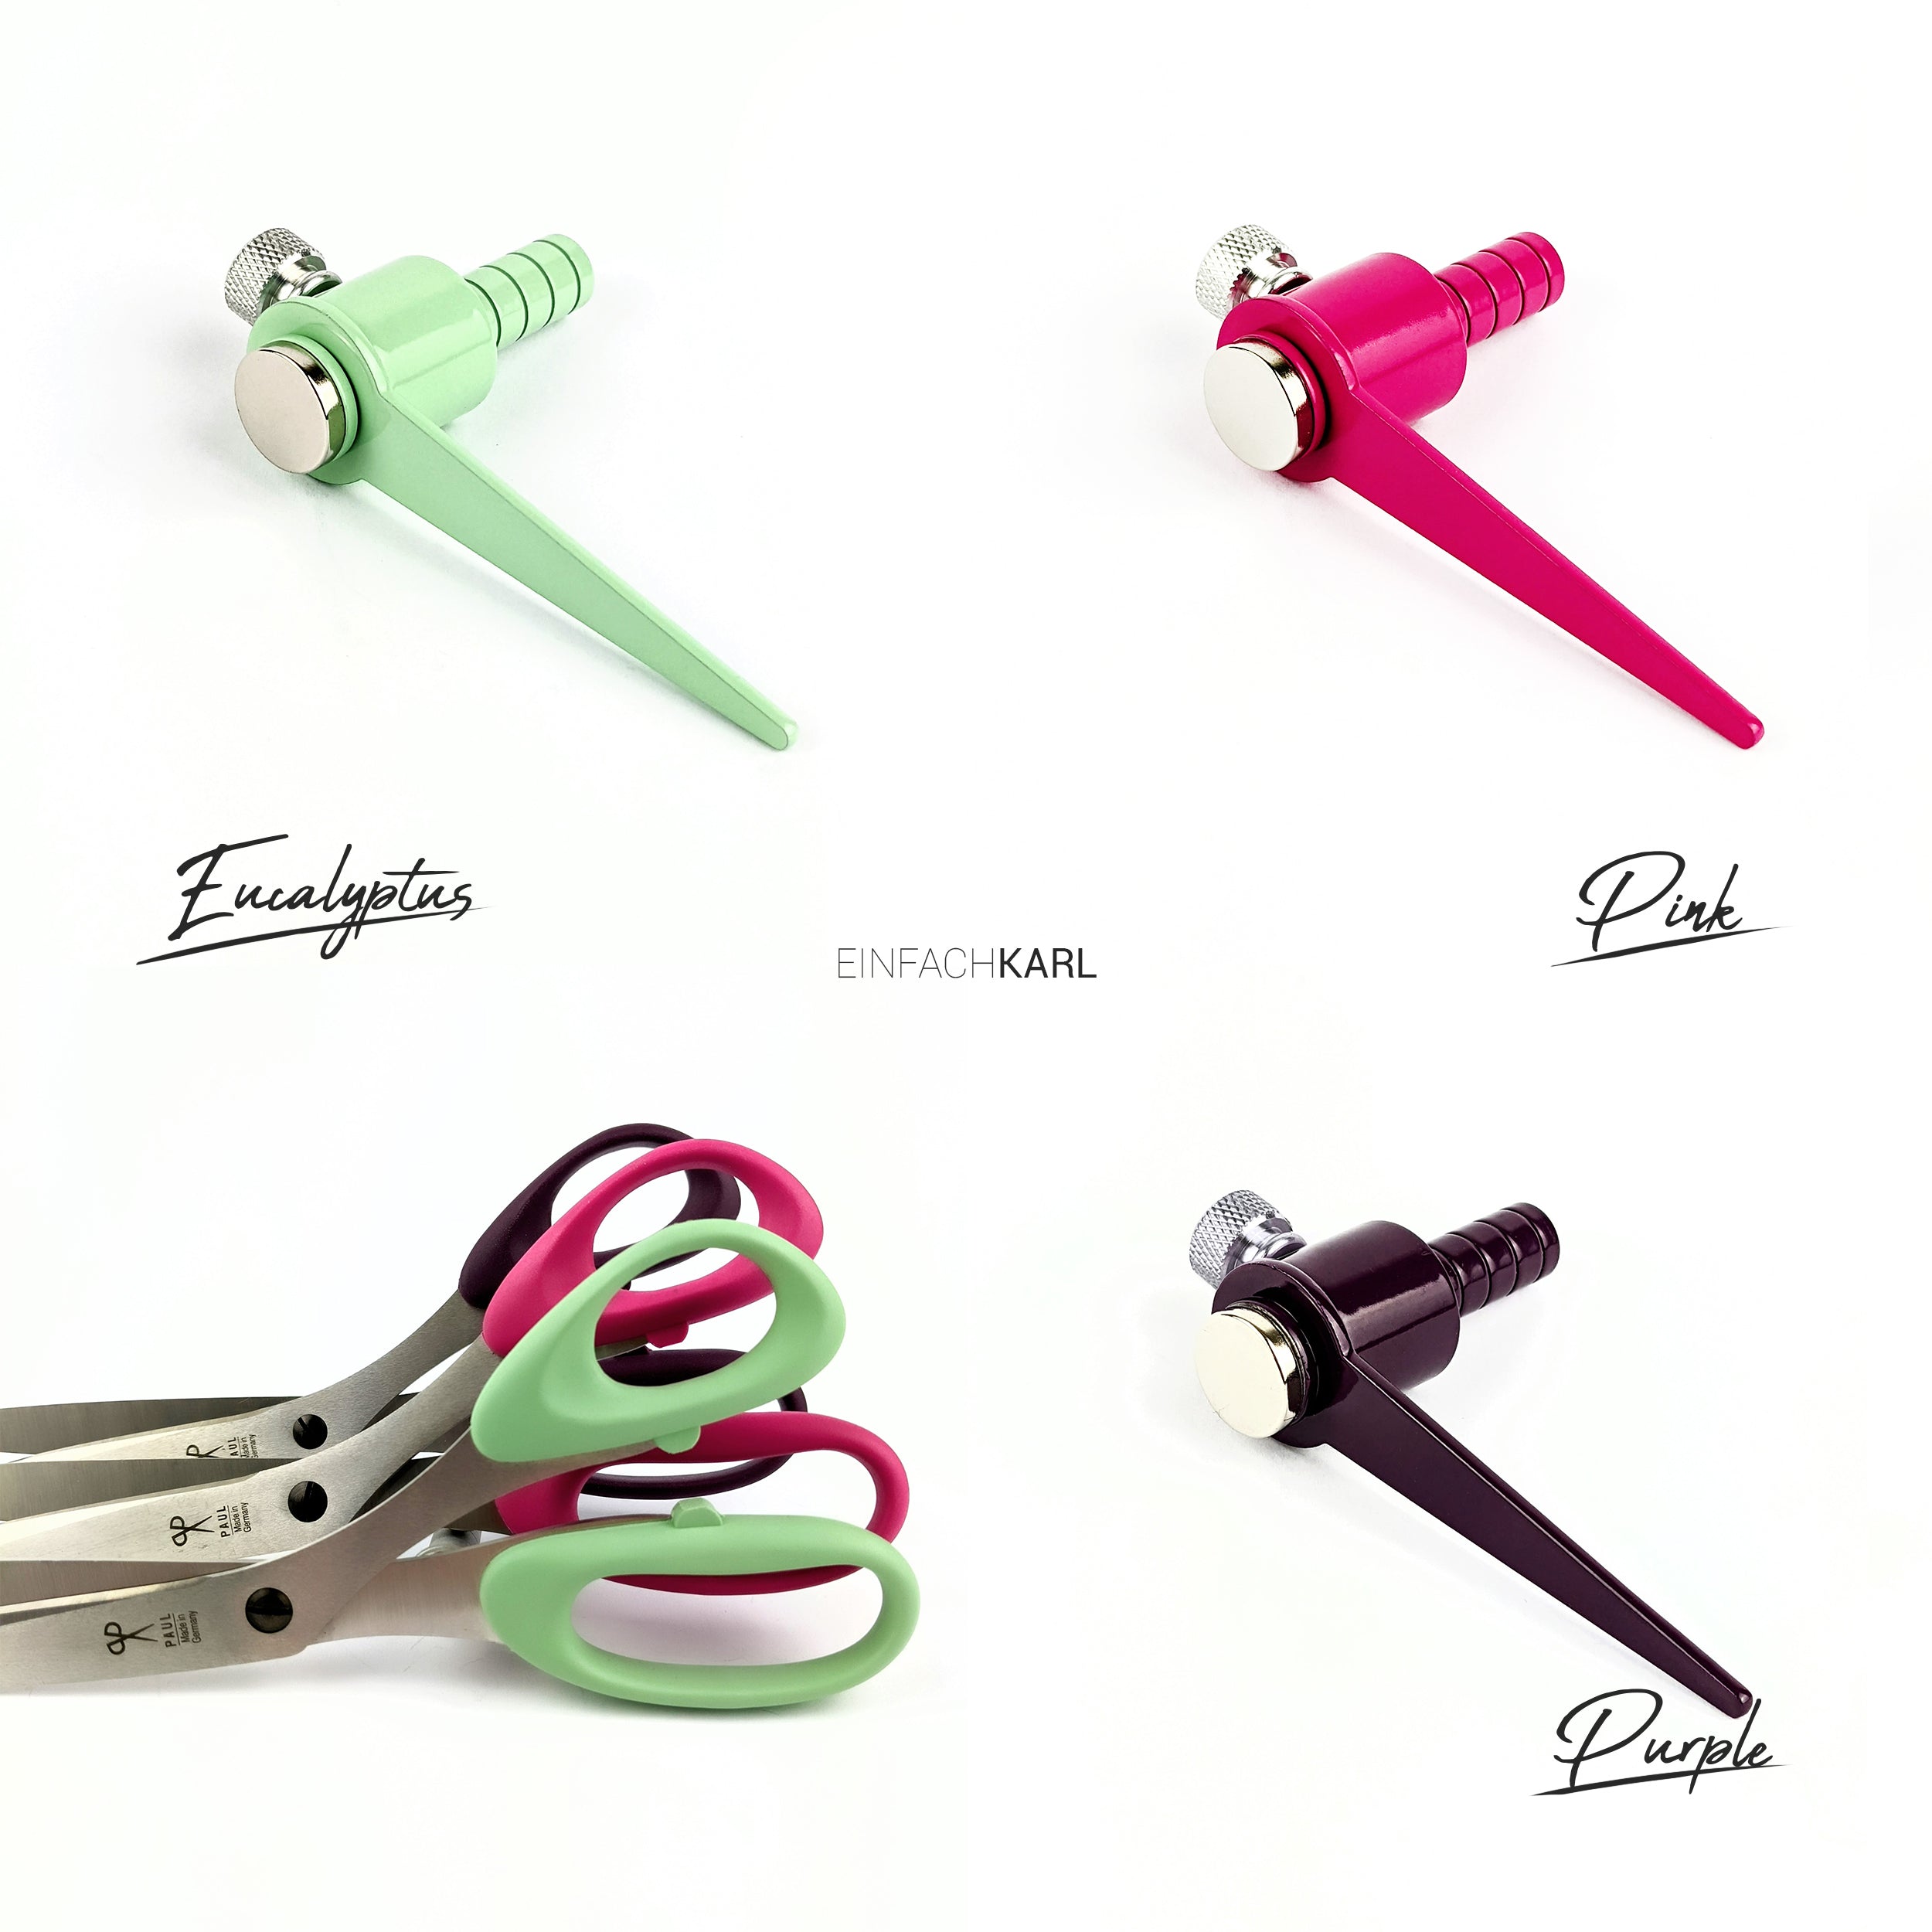 Small scissors set (color edition)